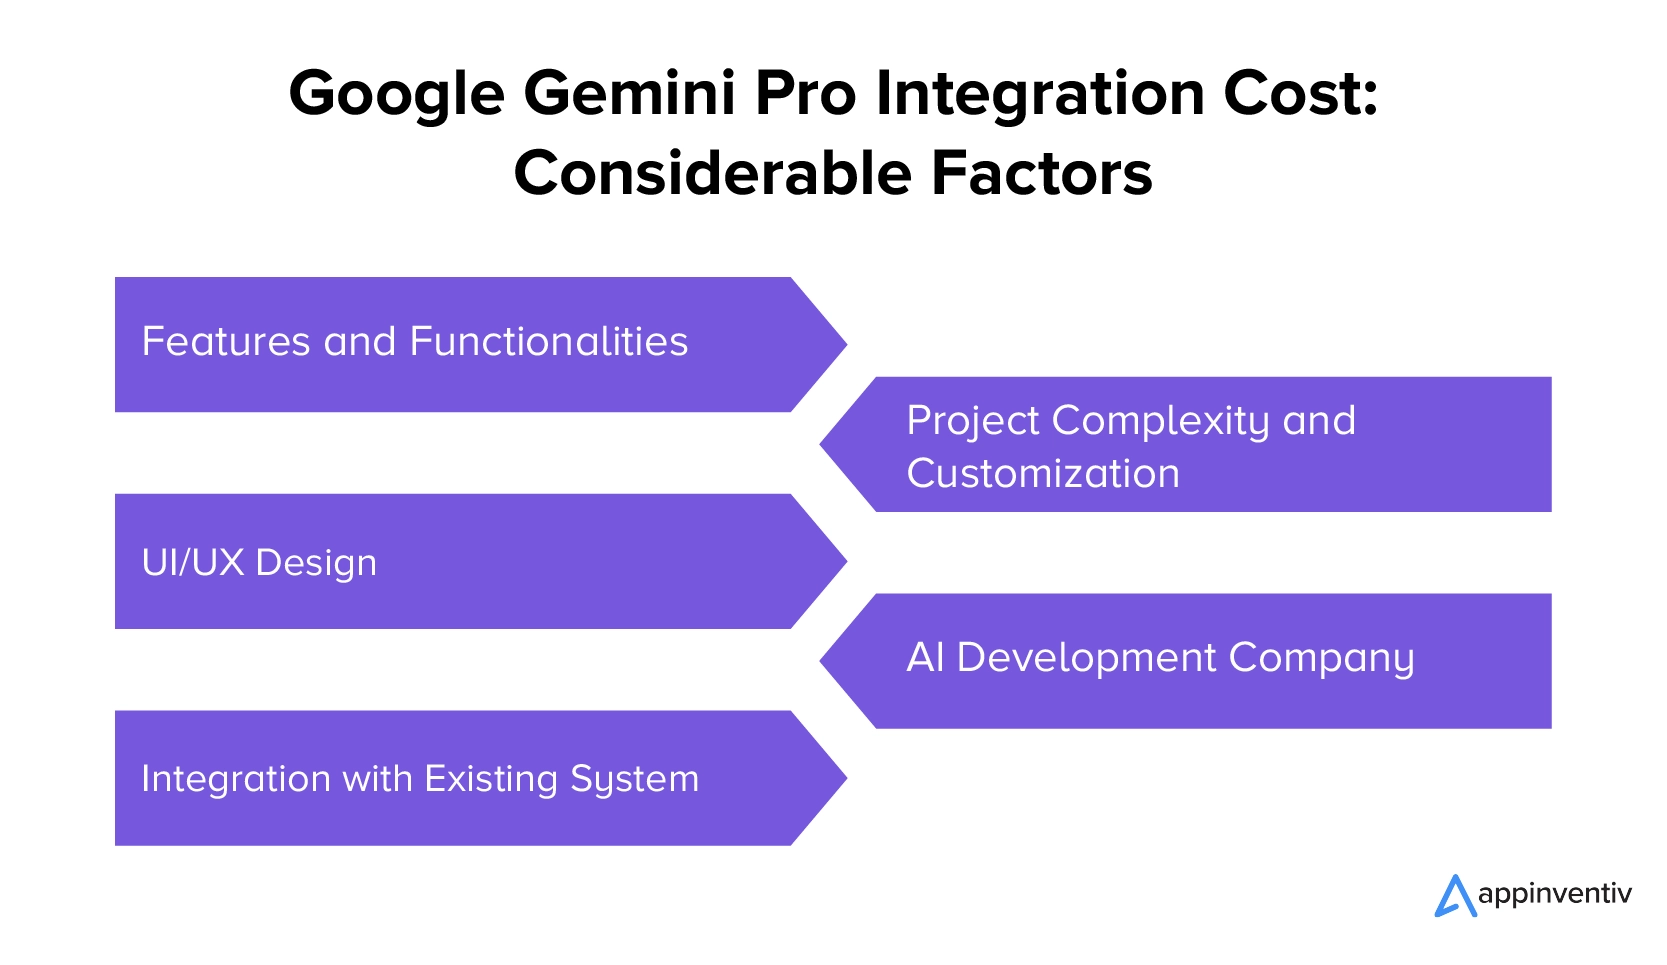 Factors Affecting Google Gemini Pro Integration Cost